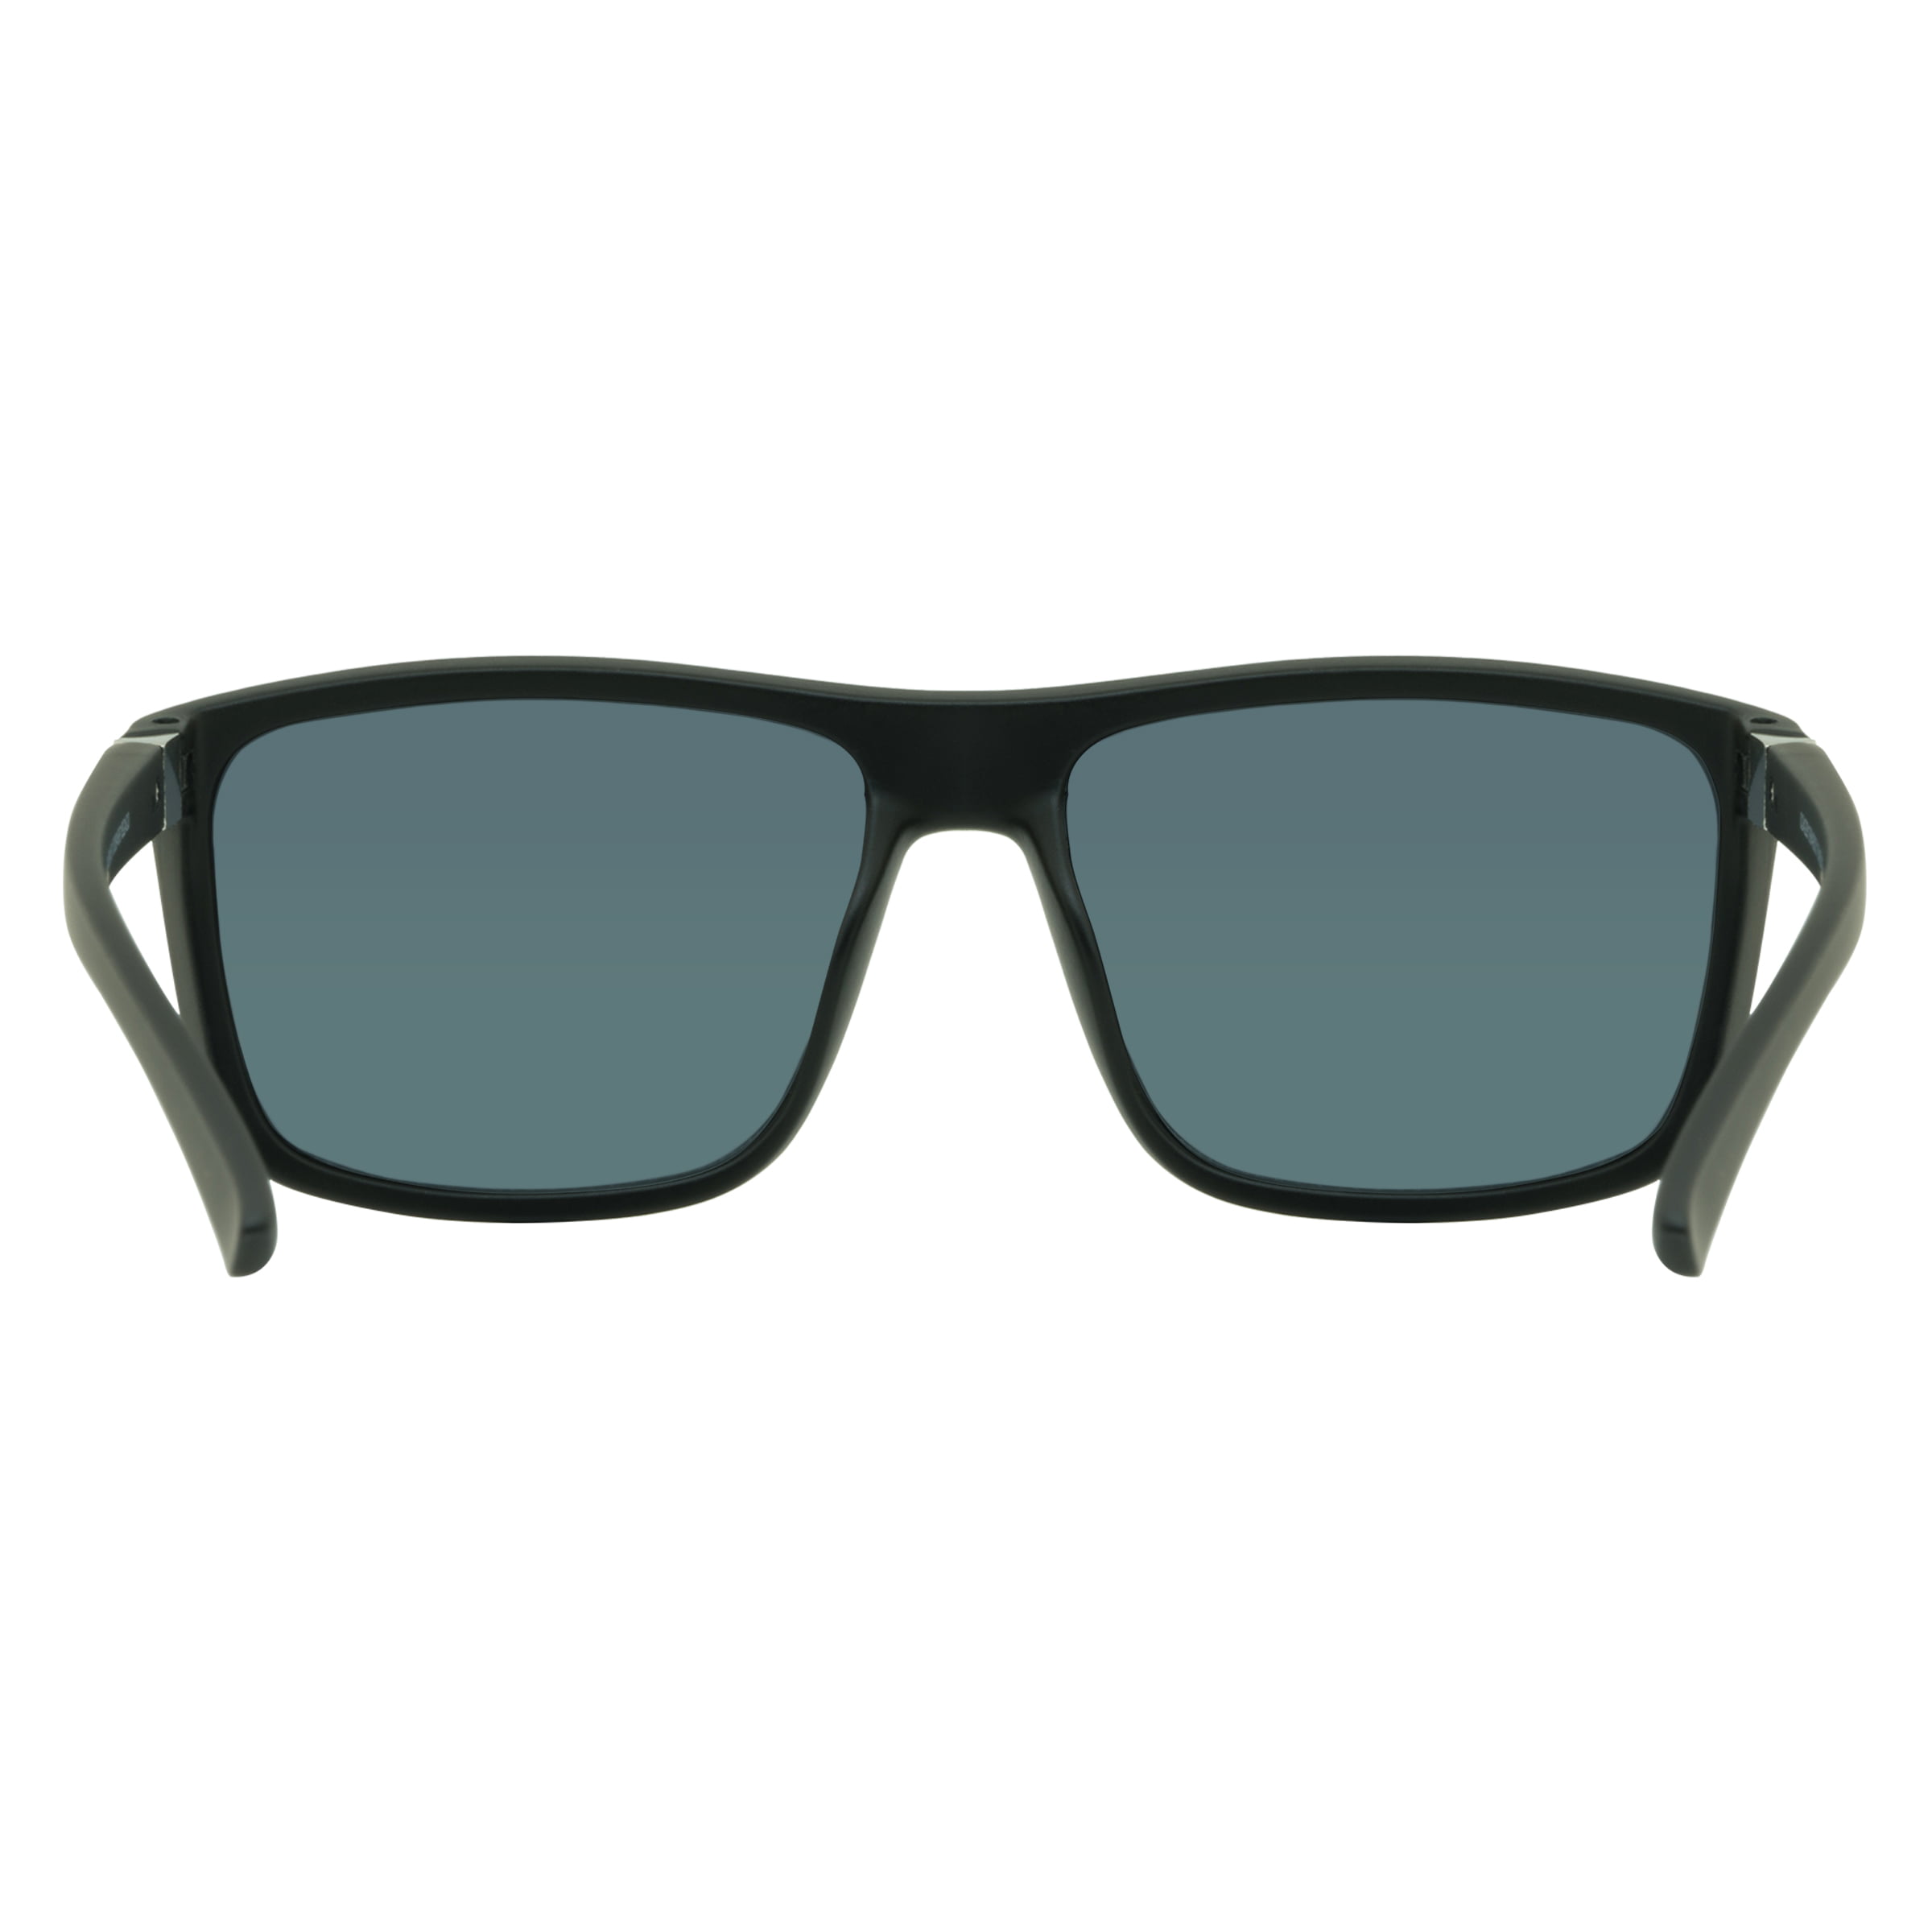 Piranha Eyewear Reaction Square Black Sunglasses with Smoke Lens